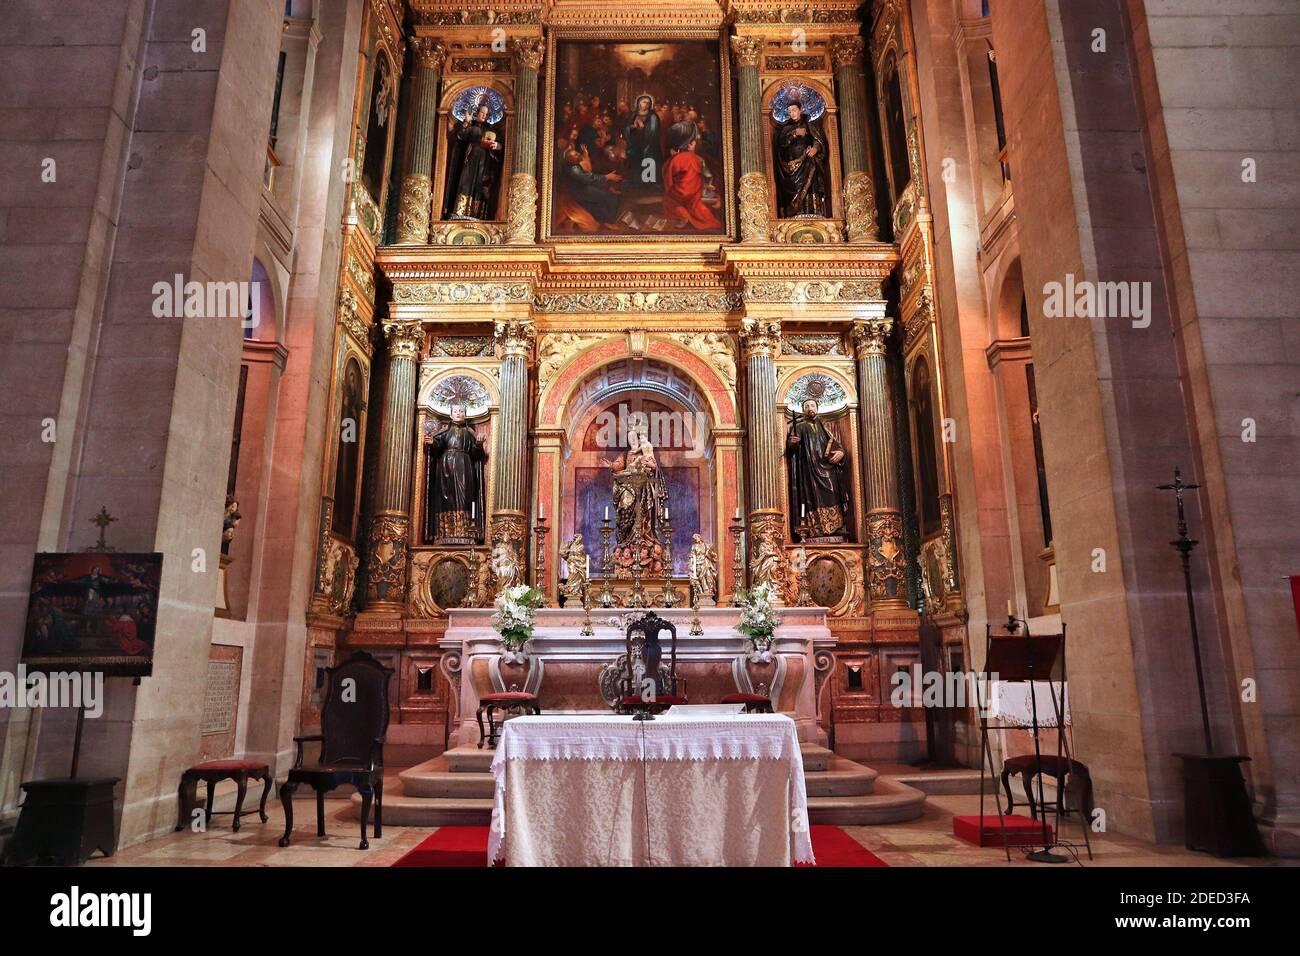 LISBON, PORTUGAL - JUNE 6, 2018: Altar in Church of Saint Roch (Igreja de Sao Roque), Lisbon, Portugal. It is the earliest Jesuit church of Portugal. Stock Photo